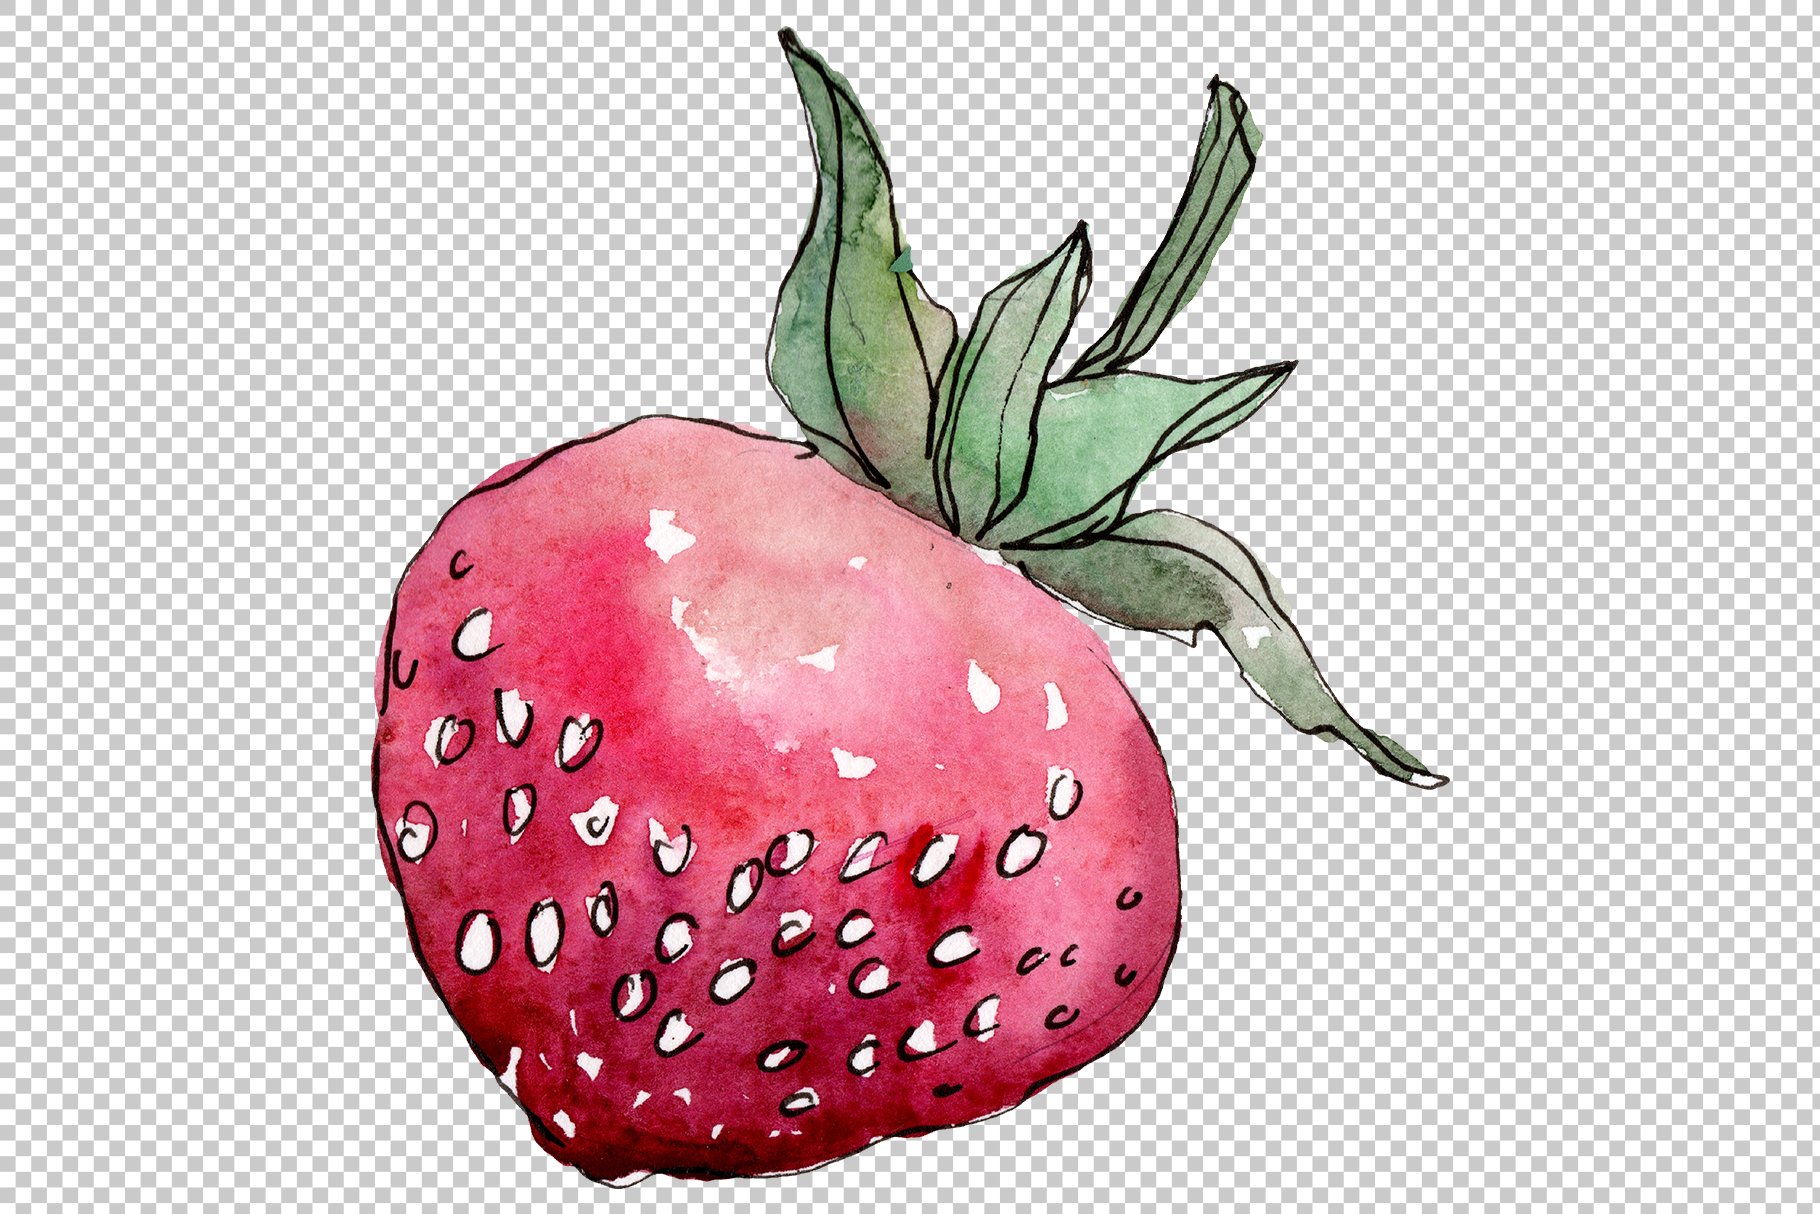 So big watercolor strawberry.